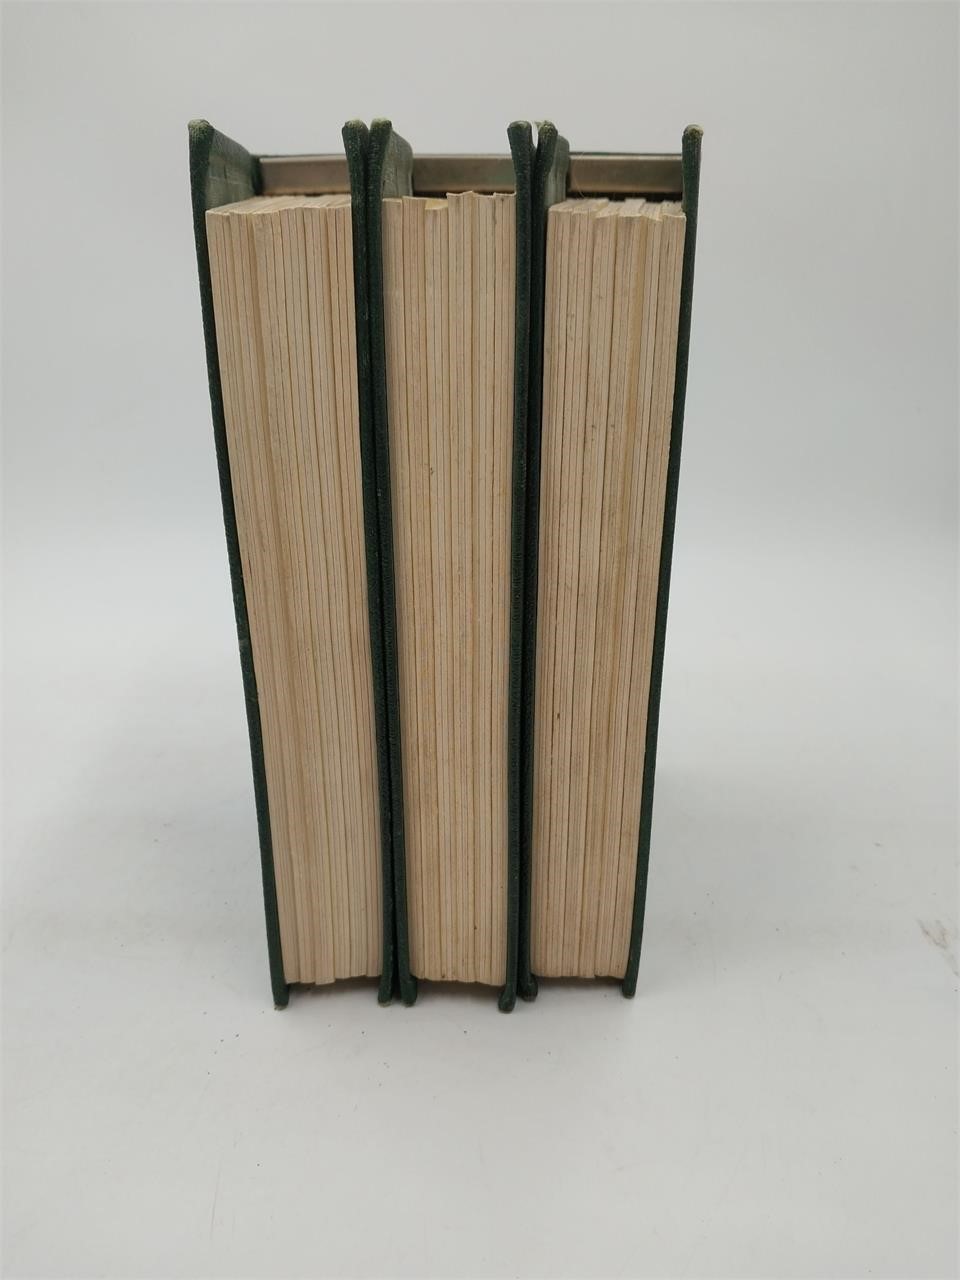 The Popular Educator (1938, Vols. 1-3)